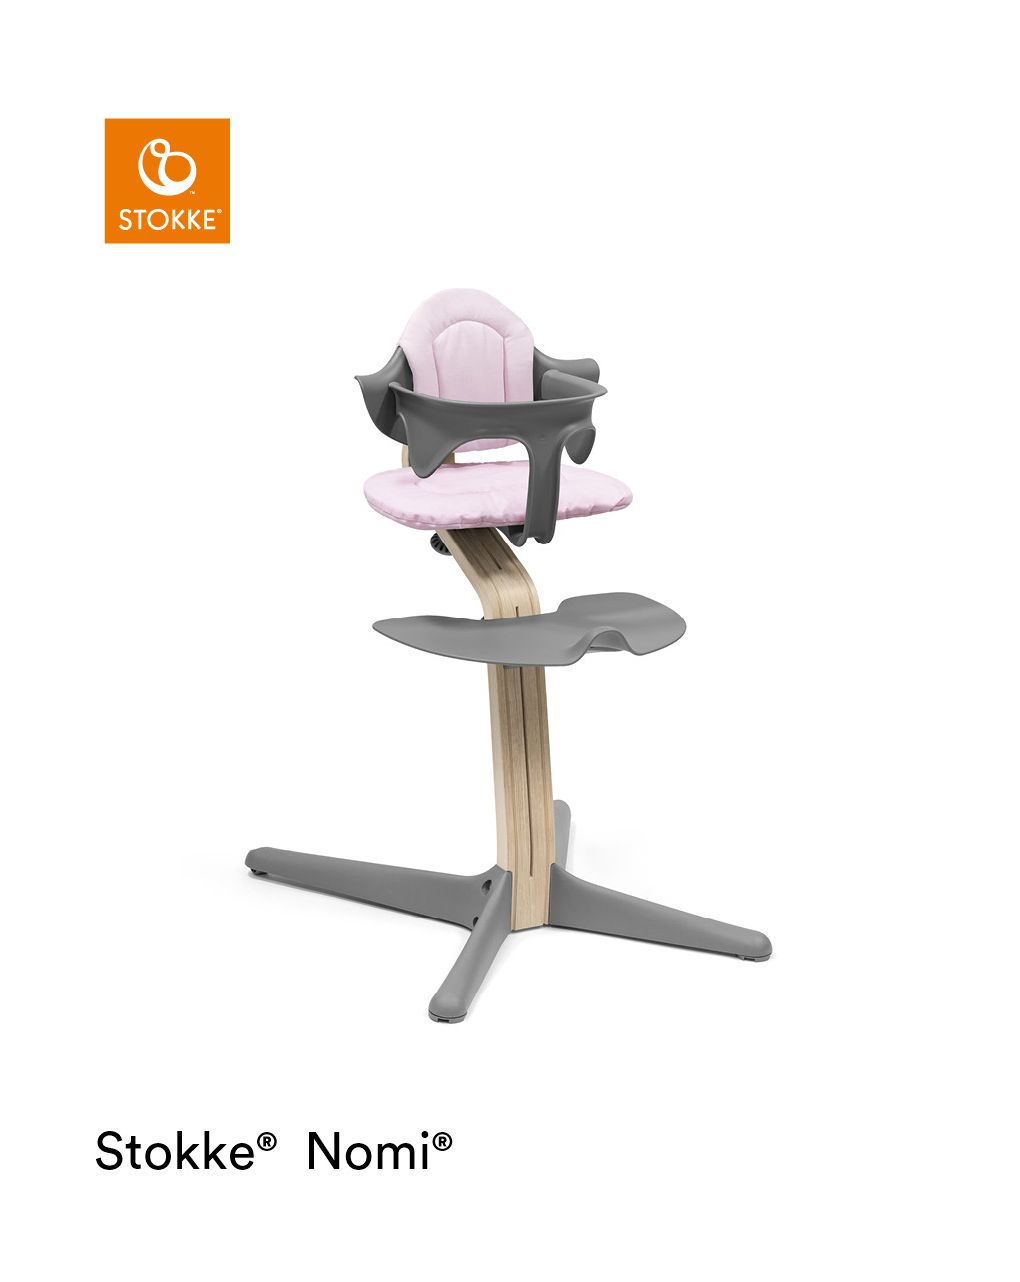 Nomi® cuscino grey pink - stokke® - Stokke